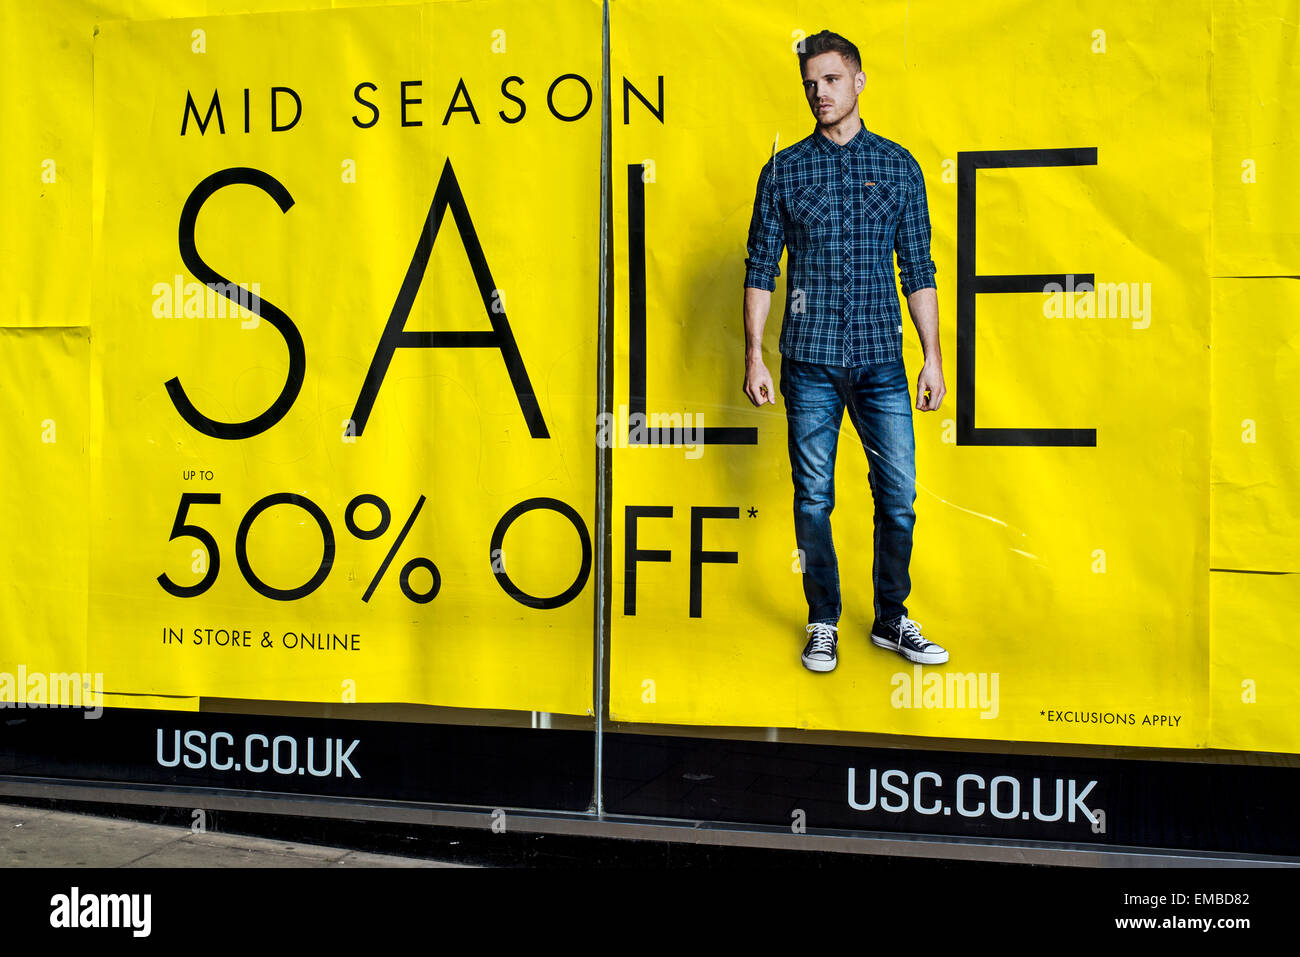 Mid season sale poster with 50% off at the USC clothing store on Princes Street, Edinburgh, Scotland, UK. Stock Photo